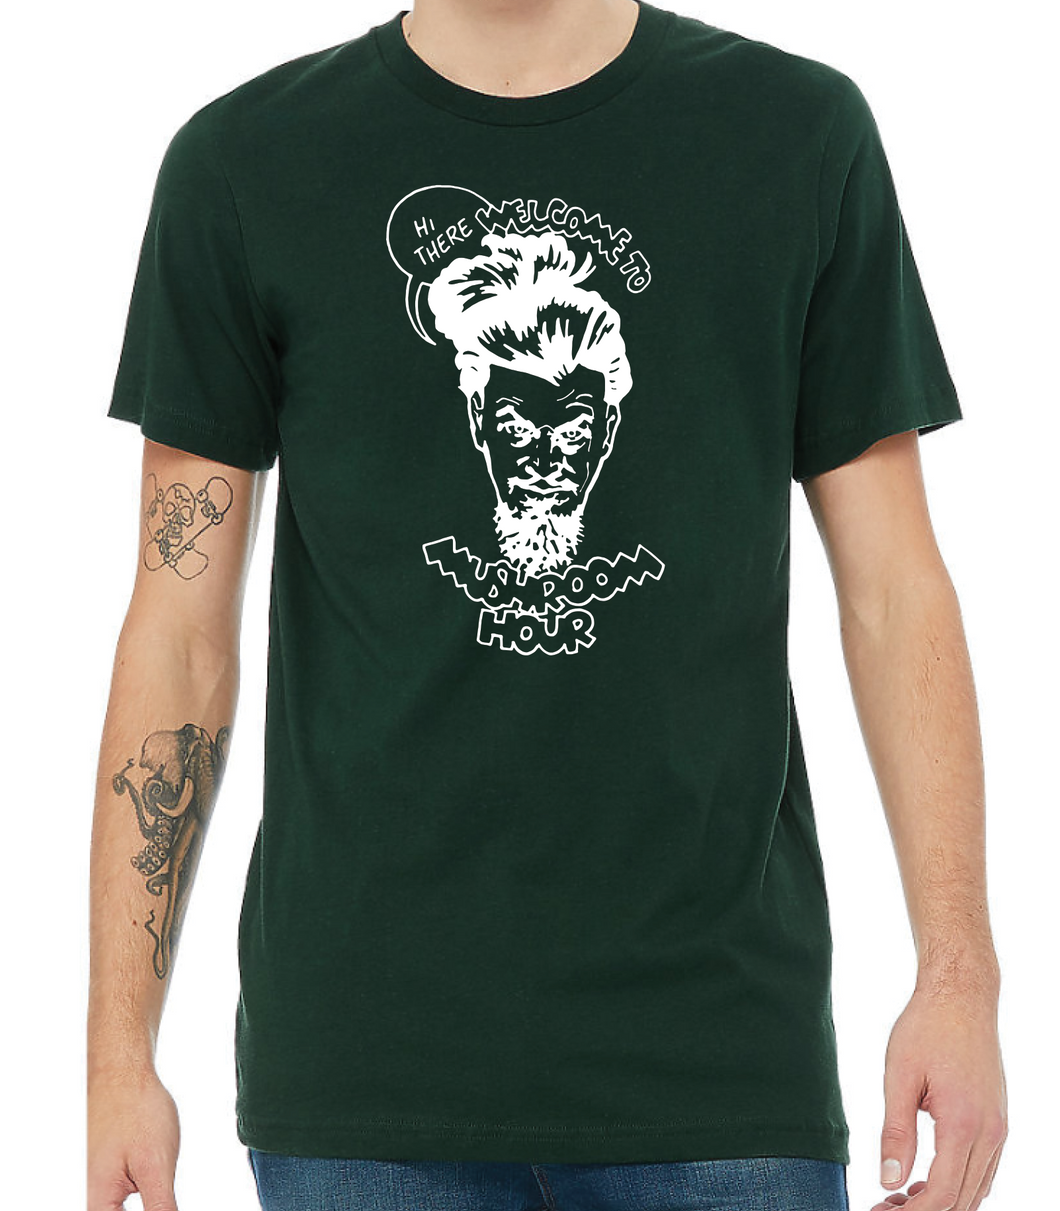 Marvel-ous Mushroom Hour T-Shirt - Dark Green and White